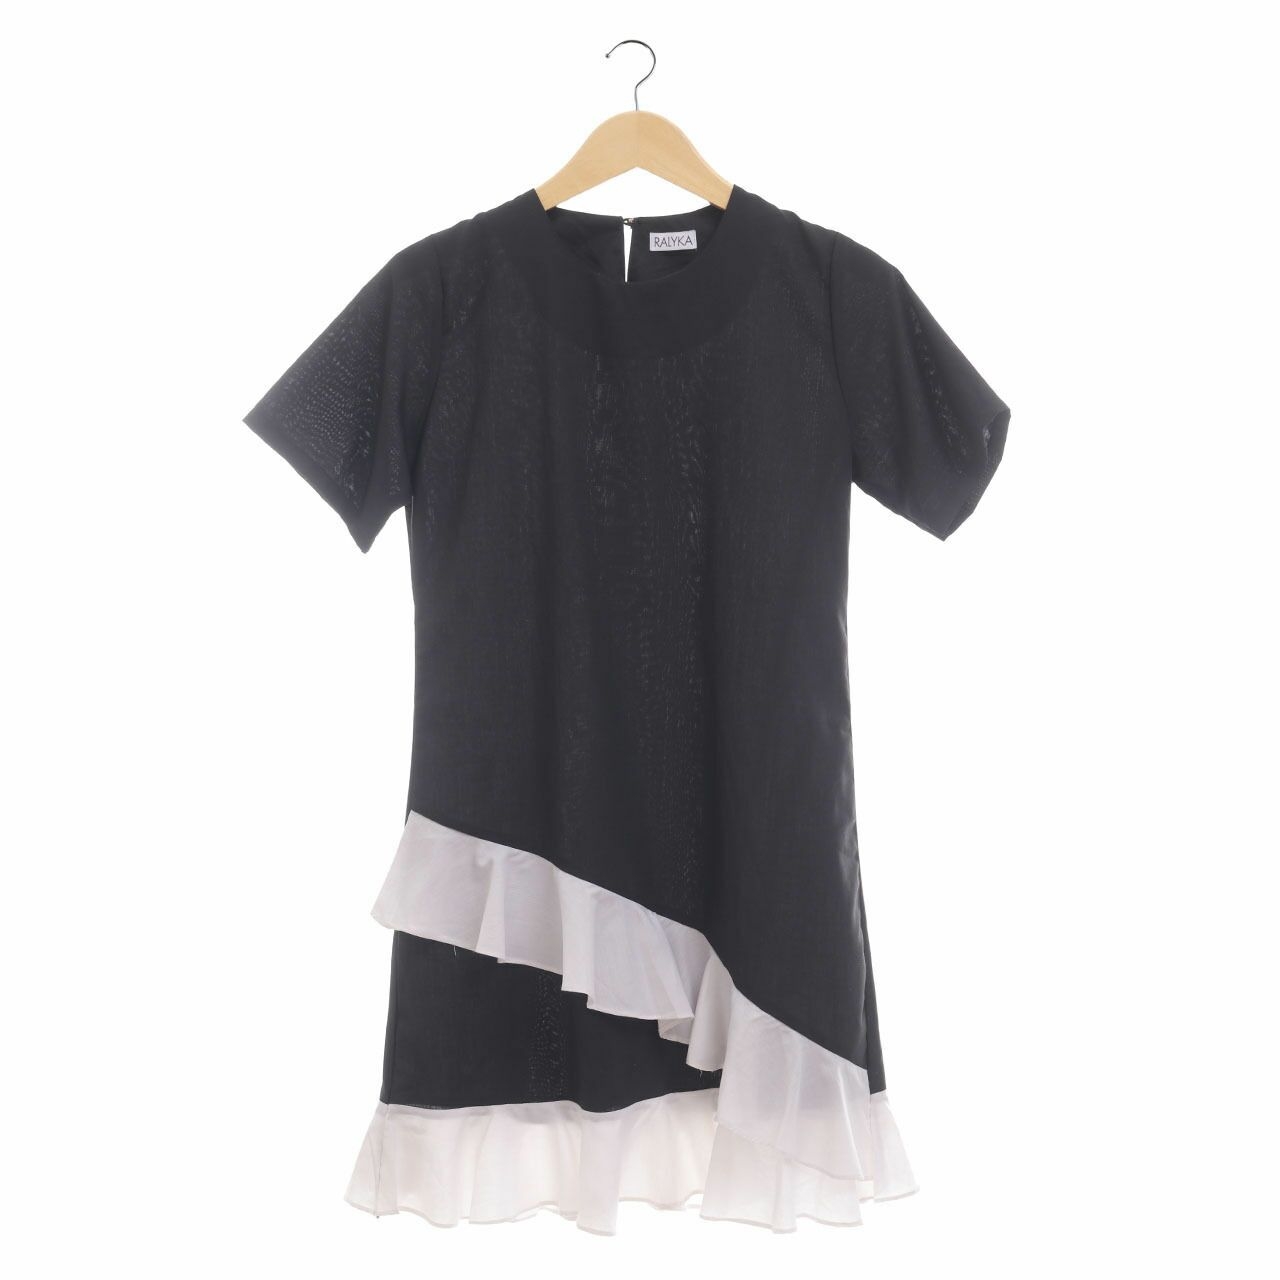 Ralyka Black & White Mini Dress